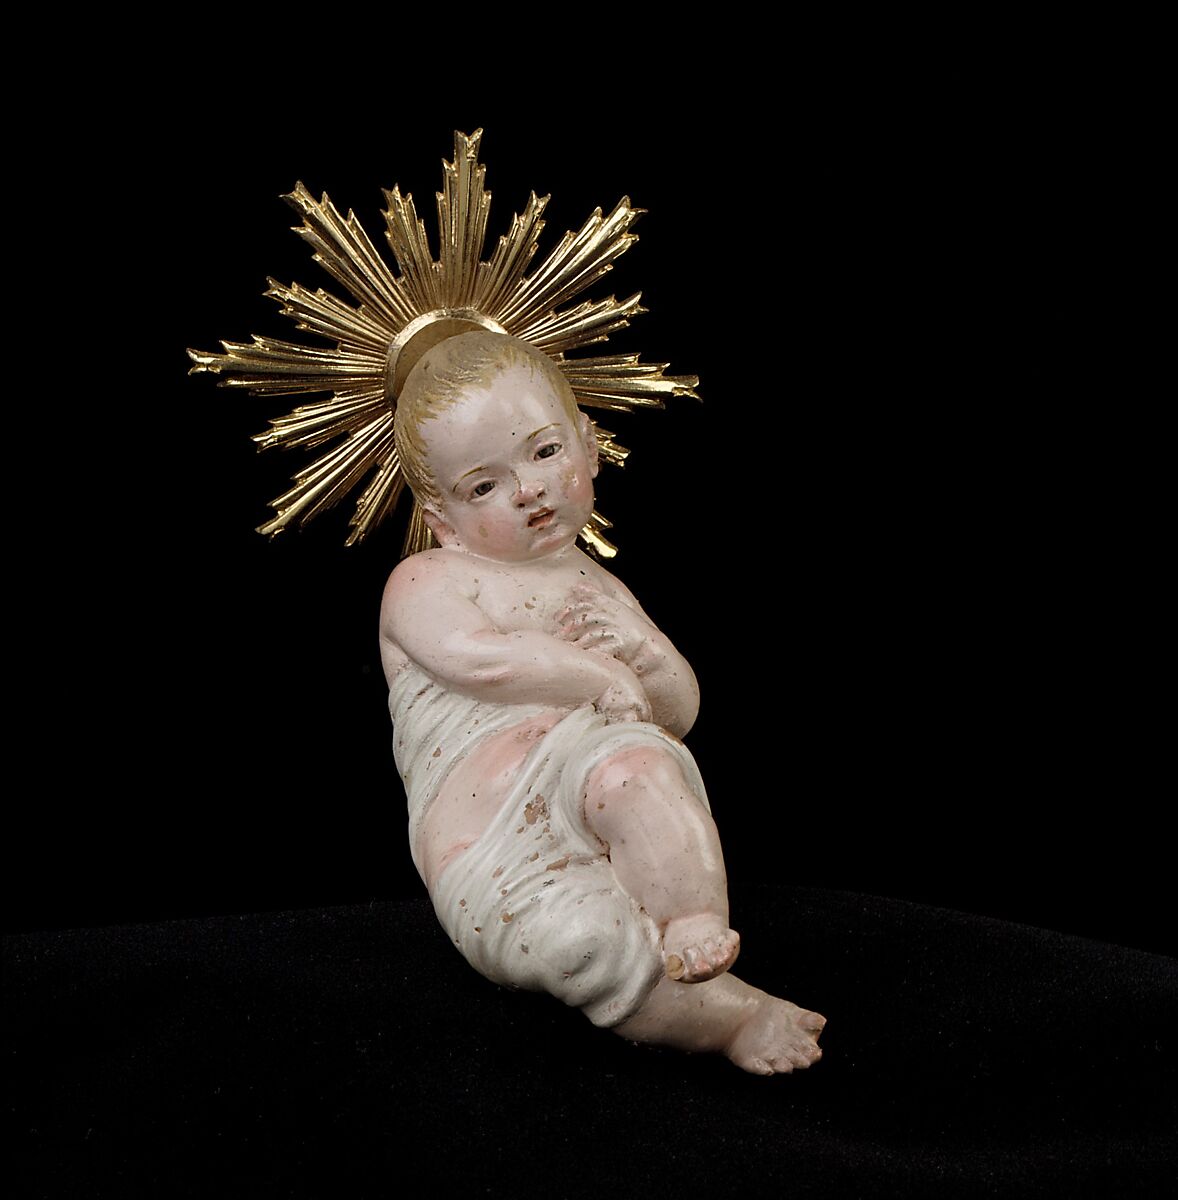 Infant Jesus, Giuseppe Sanmartino  Italian, Polychromed terracotta, charred wood and rope, silver-gilt halo, Italian, Naples